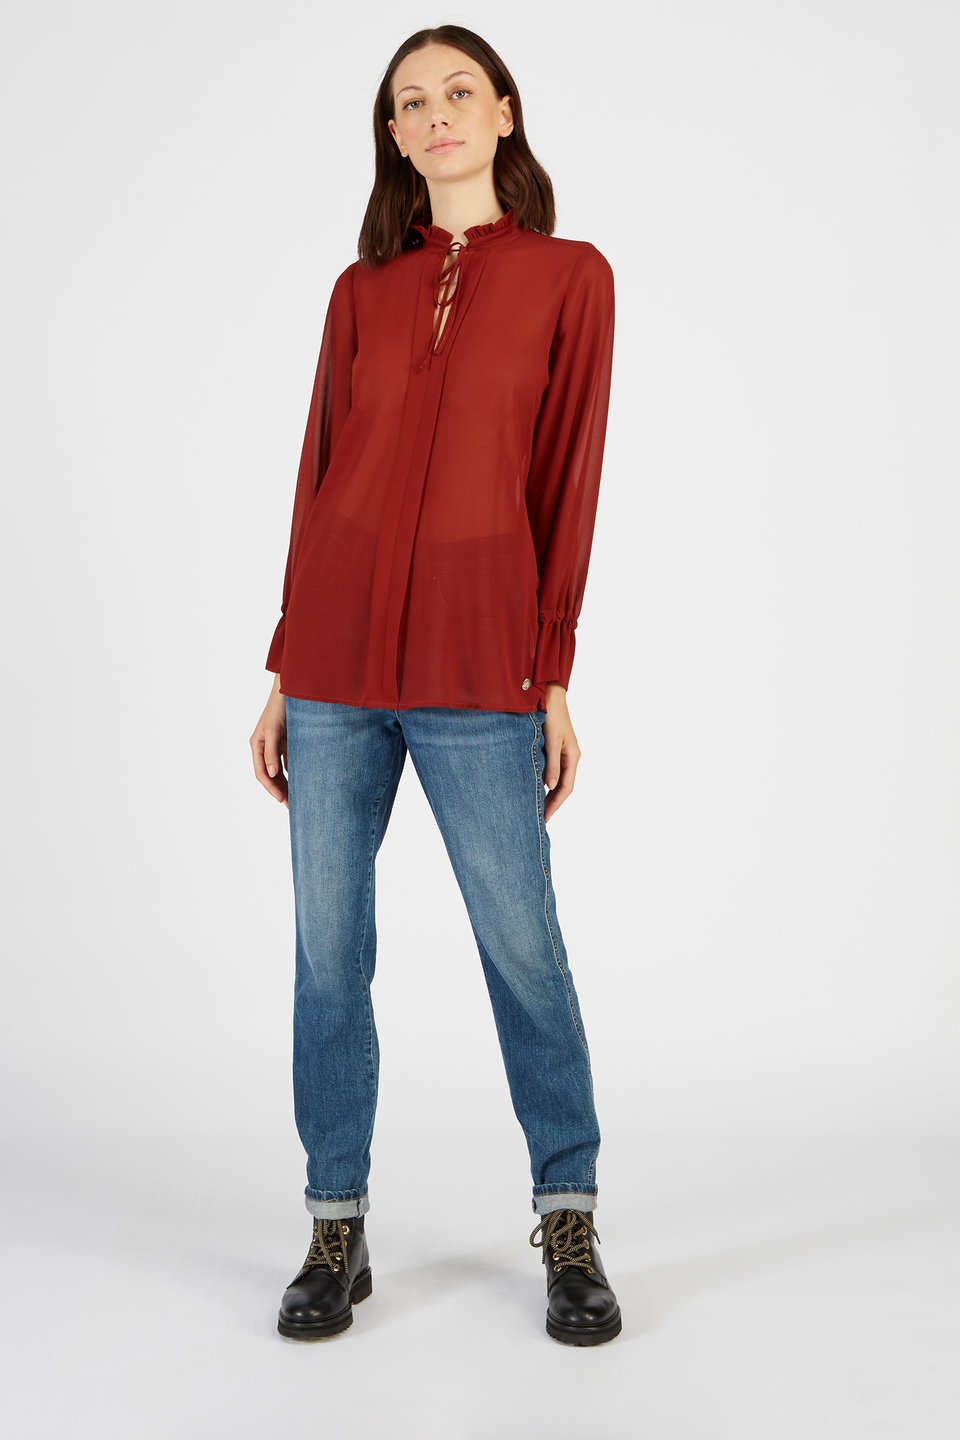 Women’s shirt Argentina fabric georgette regular fit long sleeves | La Martina - Official Online Shop